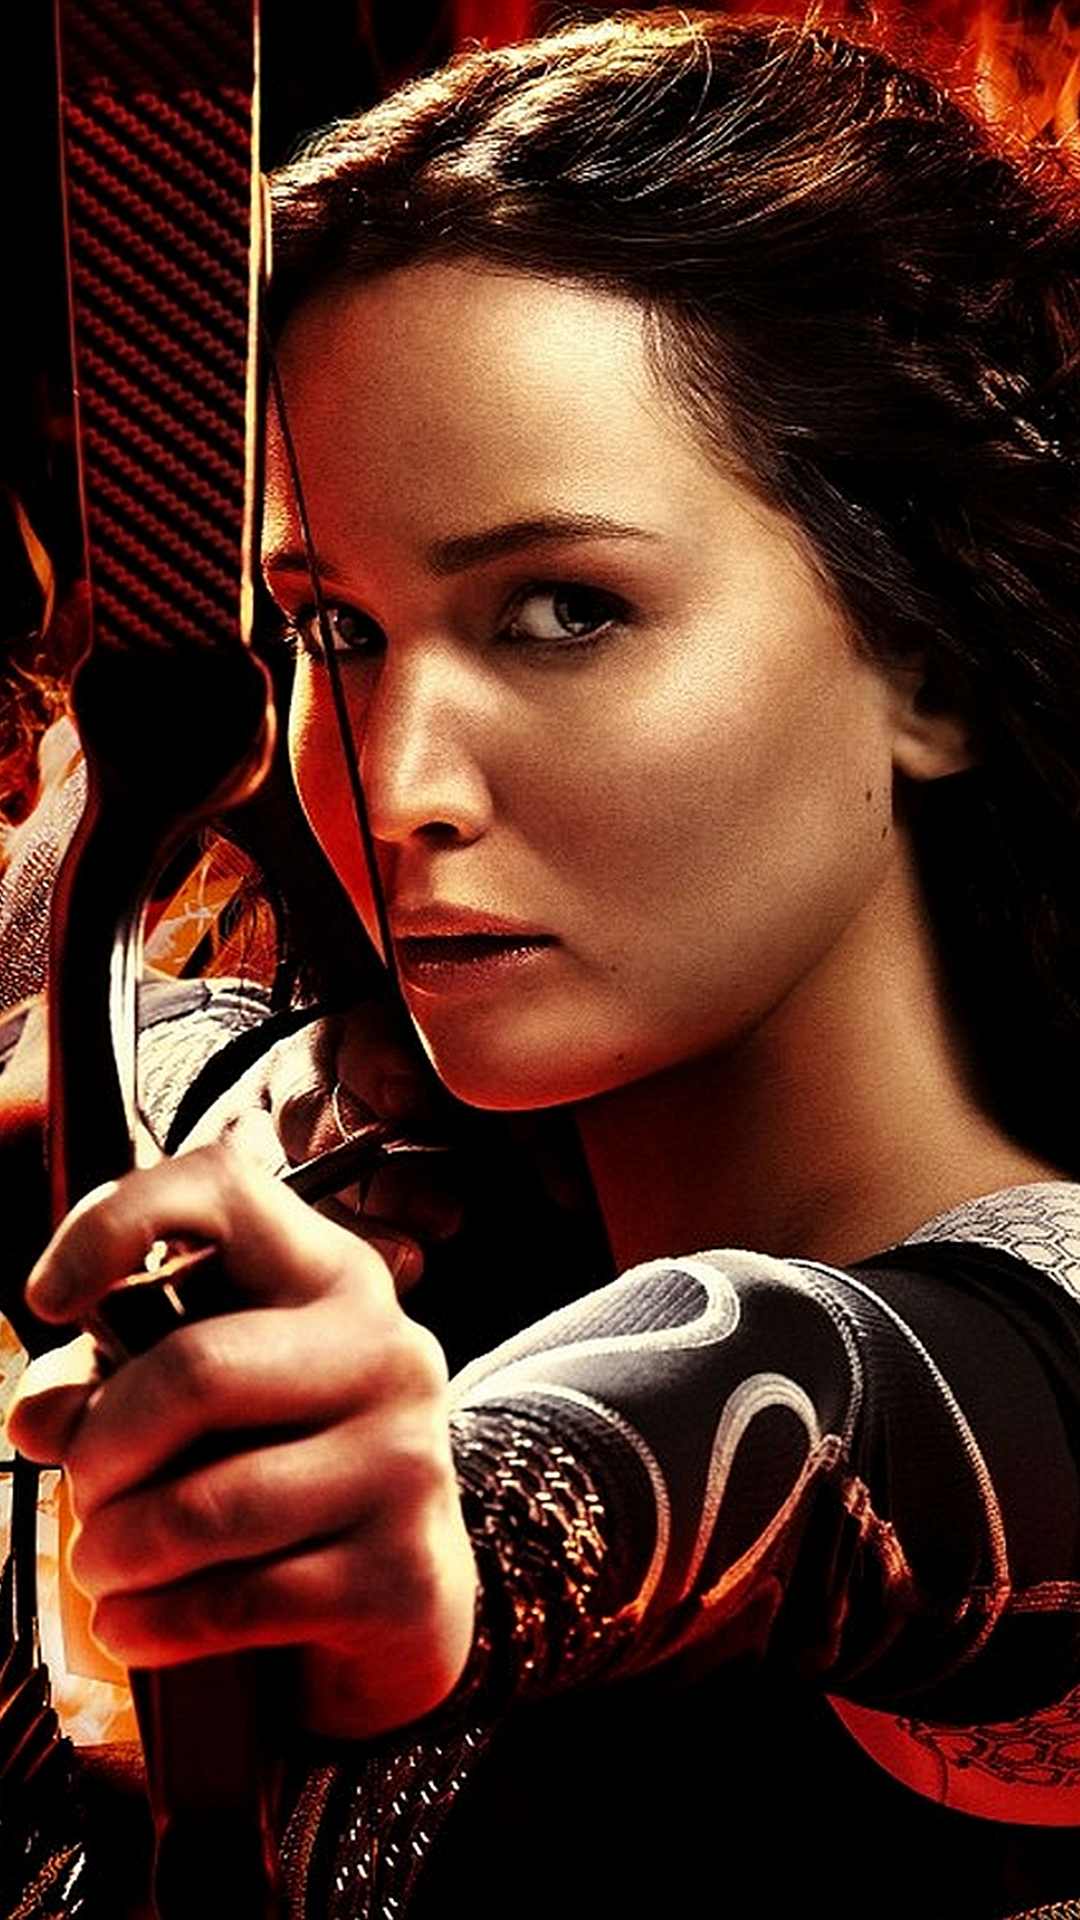 The Hunger Games: Catching Fire - Katniss Everdeen, Entertainment Backgrounds, wallpapers for Samsung Galaxy S4, fondos galaxy s4, fondos de pantalla galaxy s4, sfondi samsung galaxy s4, hintergrund HD 1080x1920